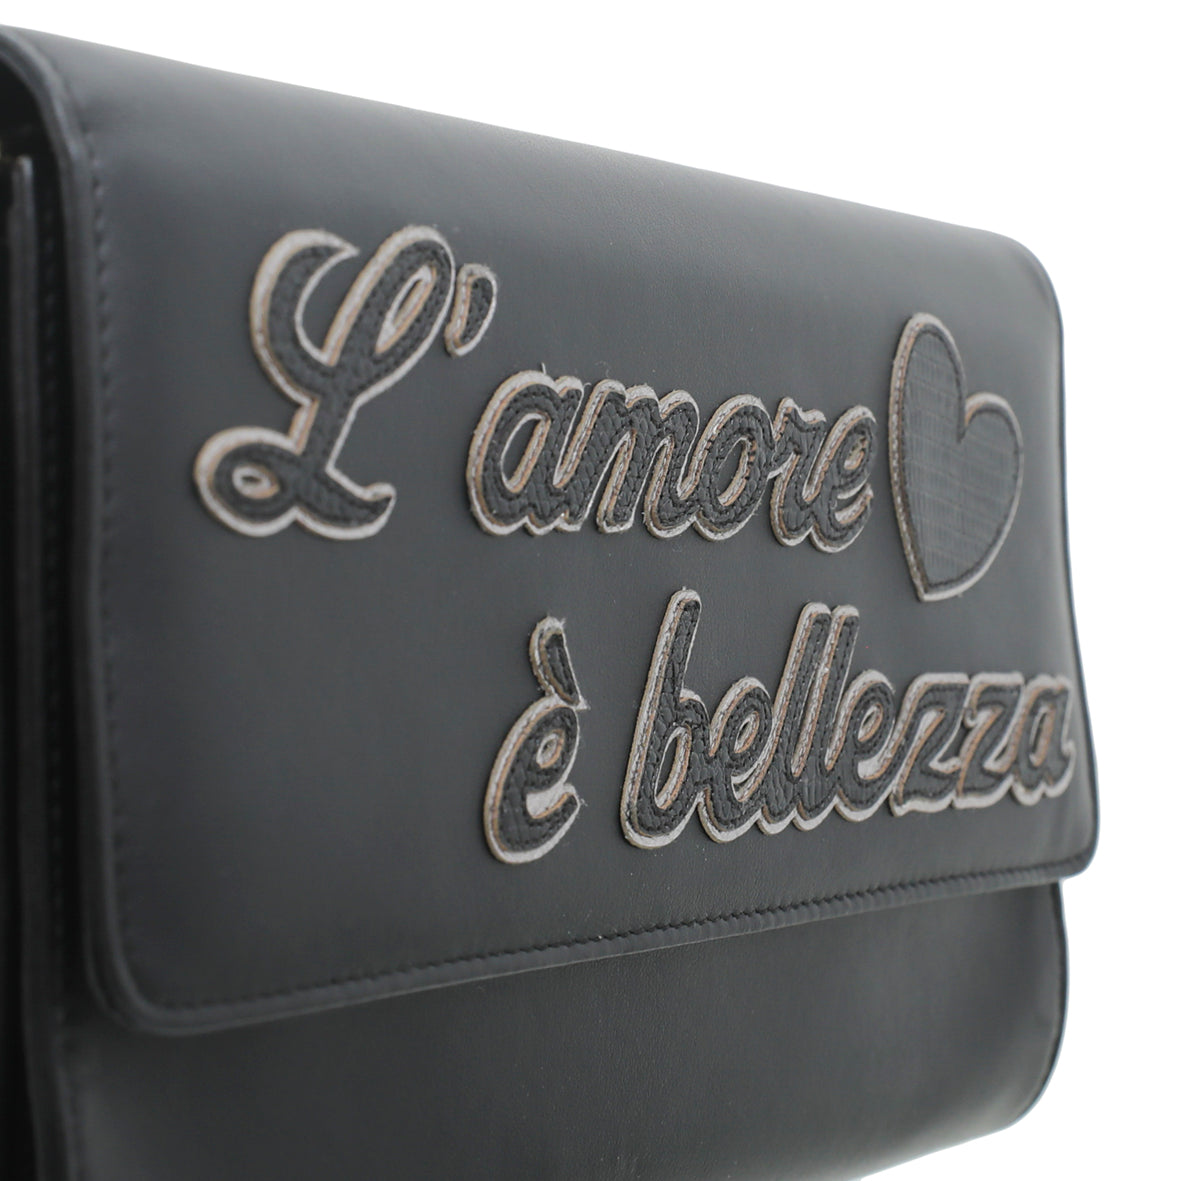 Dolce & Gabbana Black L'amore E Bellezza Chain Bag